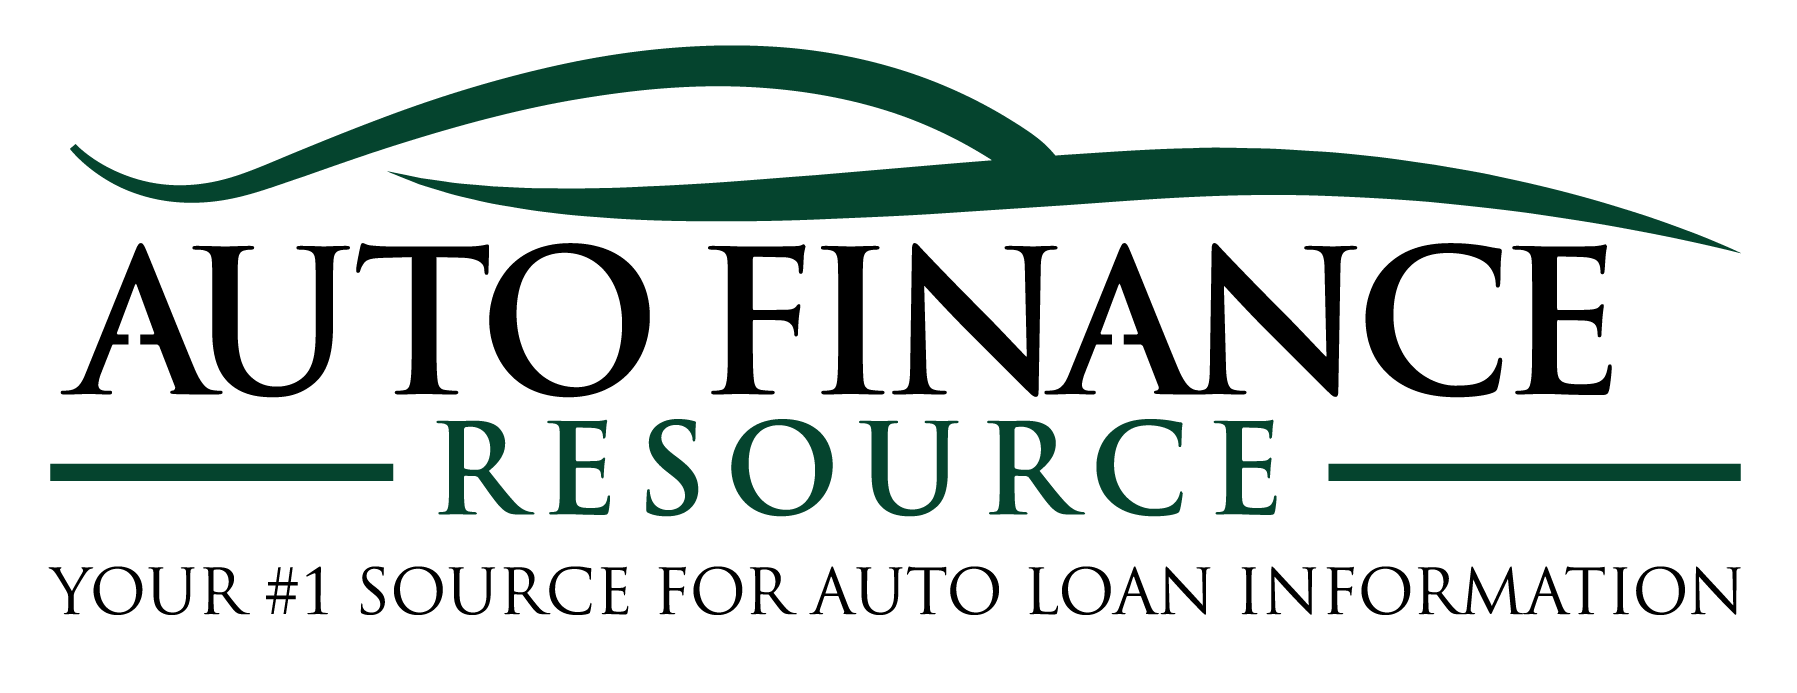 Auto Finance Logo - Auto Finance Resource